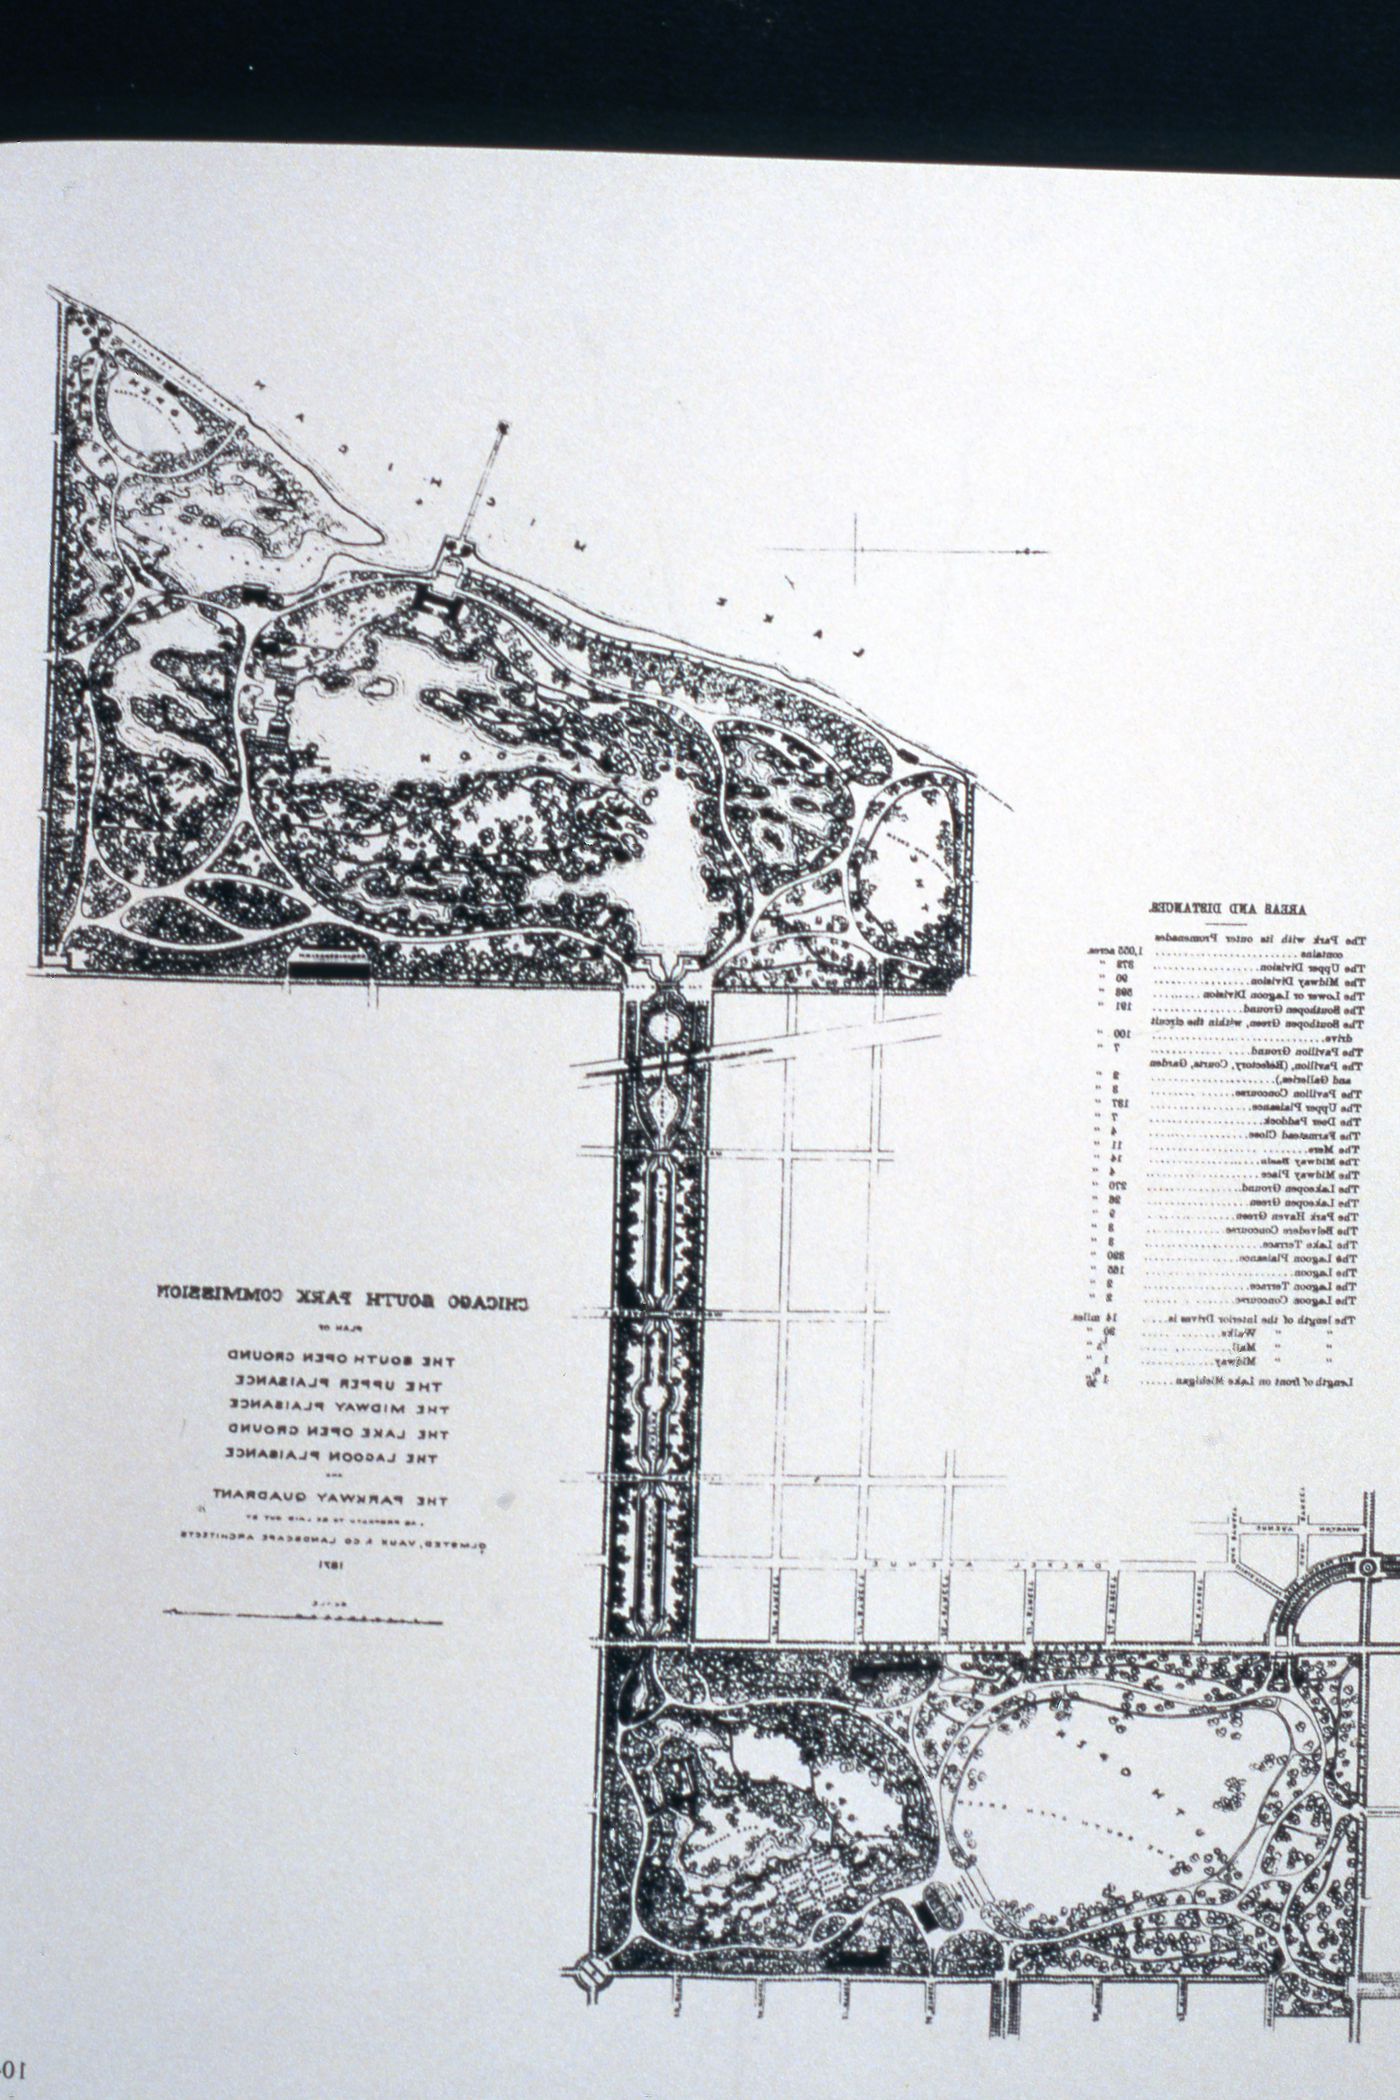 Chicago South Park Commission document for research for Olmsted: L'origine del parco urbano e del parco naturale contemporaneo